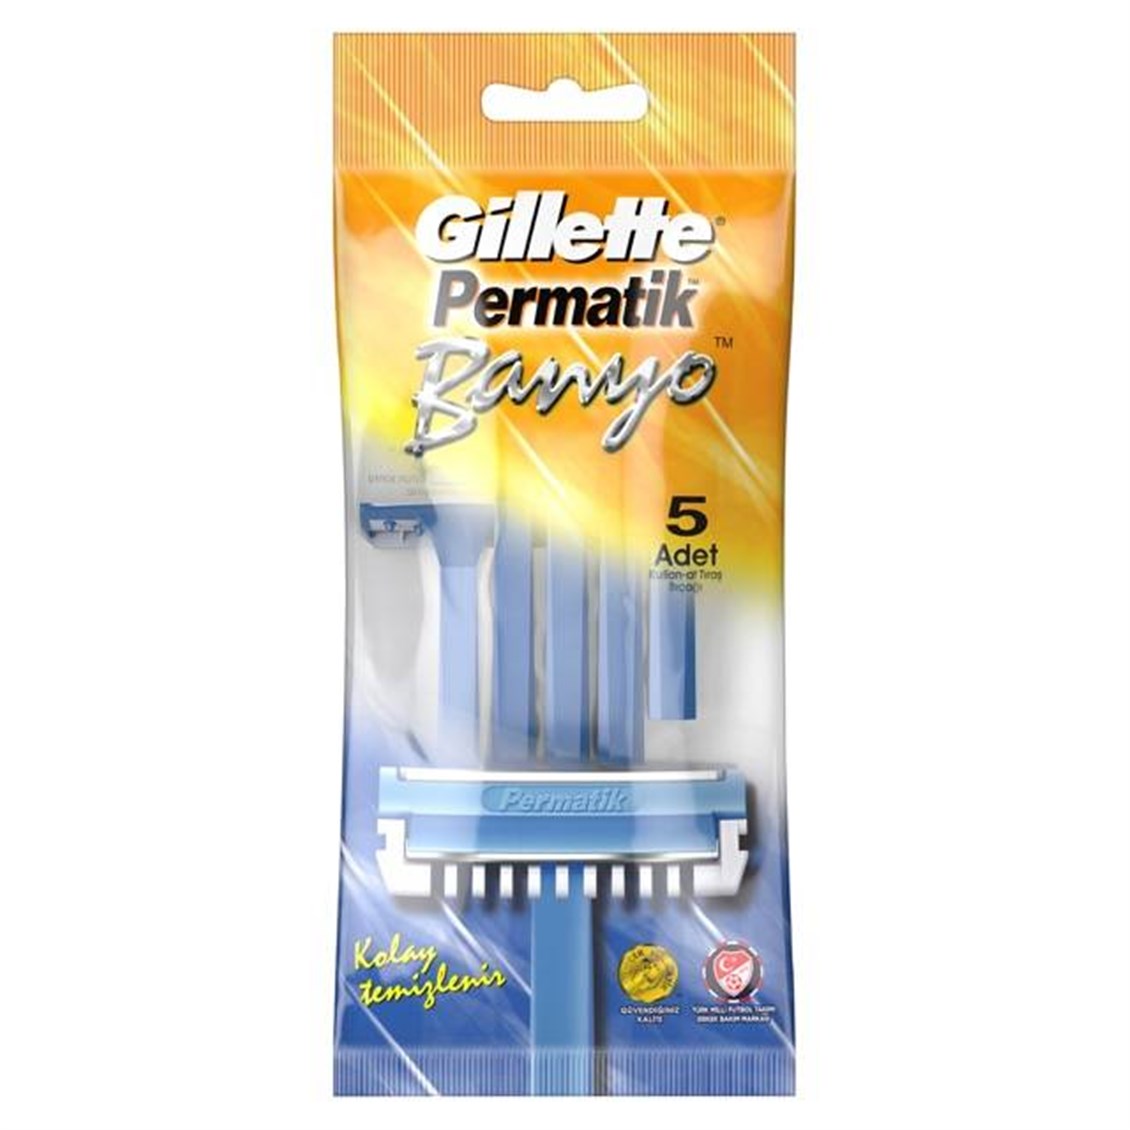 Gillette Permatik Banyo Kullan At Tıraş Bıçağı 5'li - Onur Market